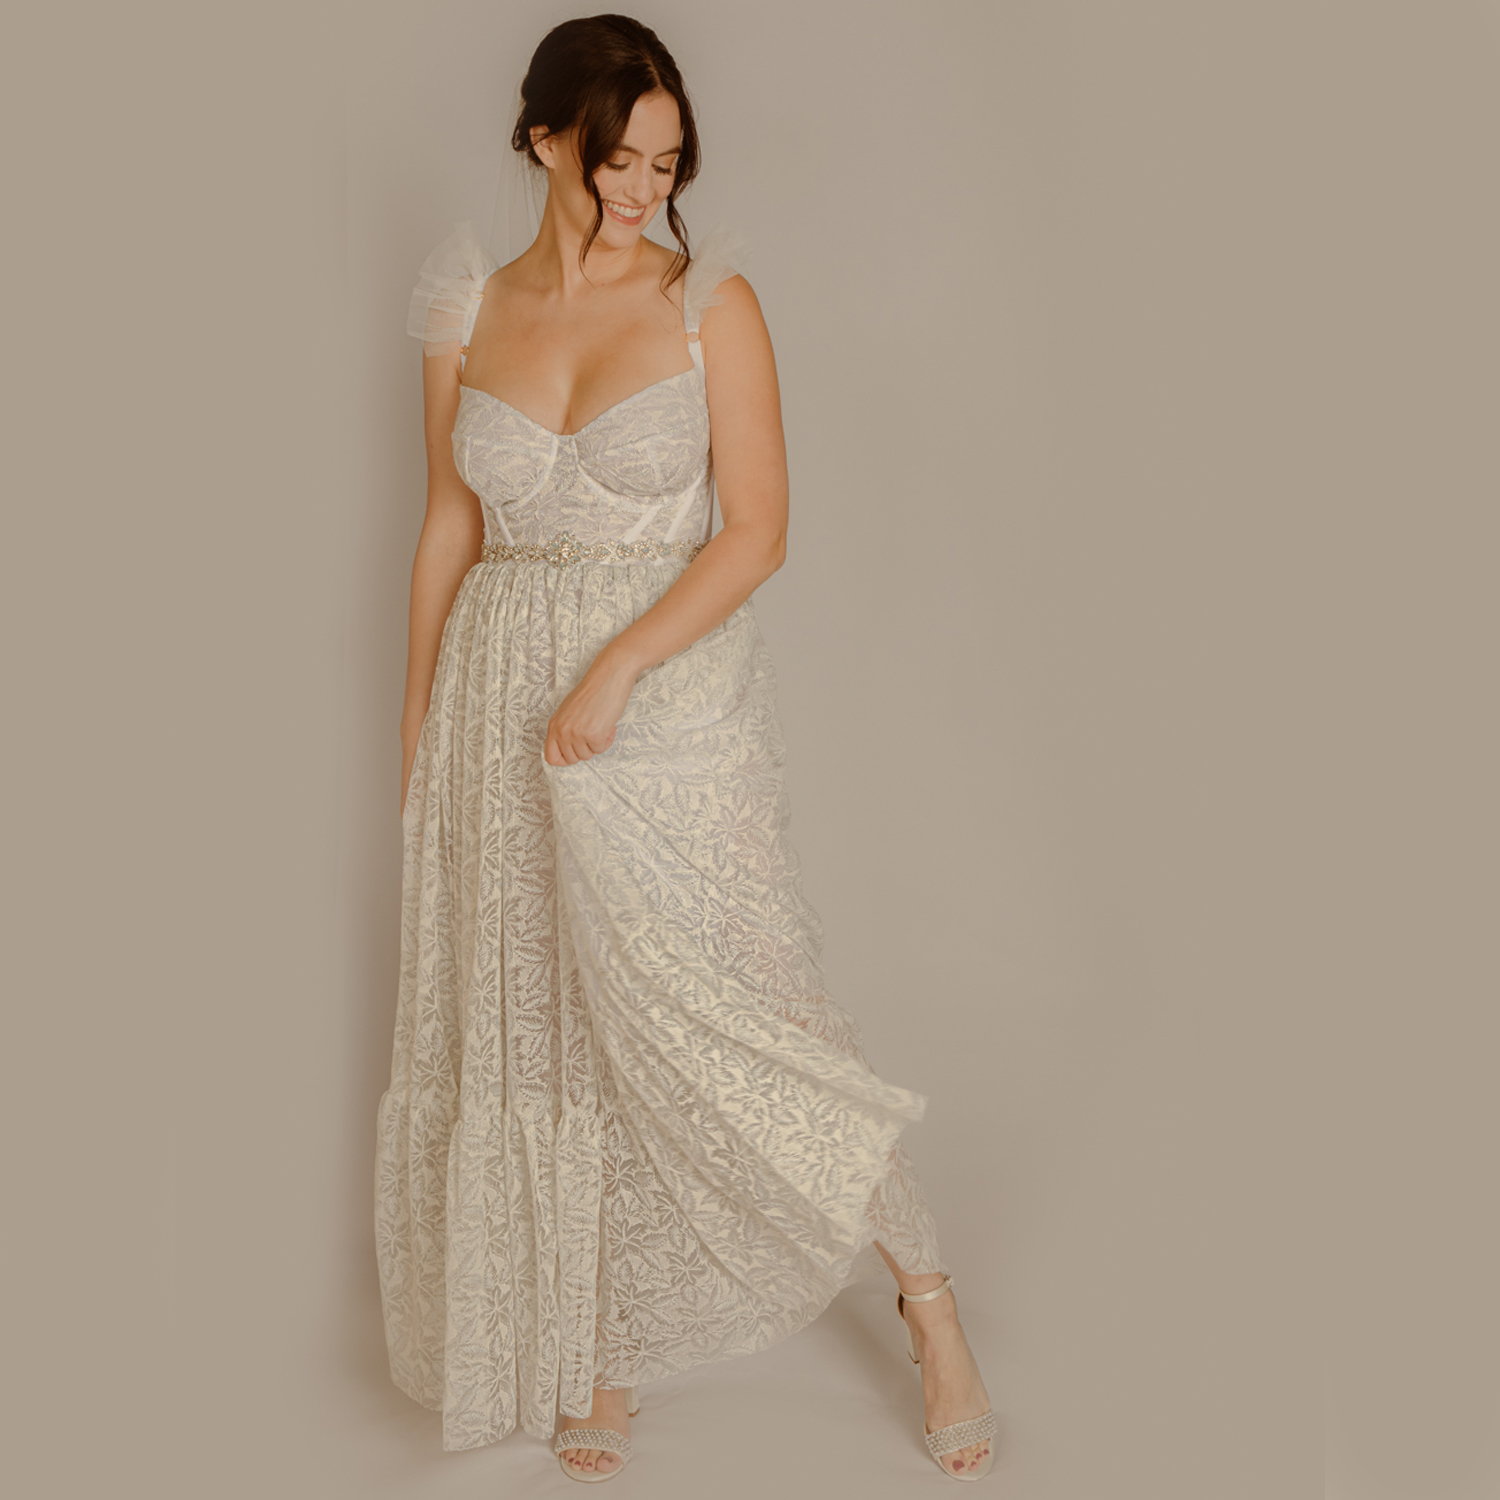 Bridal En Suite: Make Your Own Wedding Dress + Lingerie